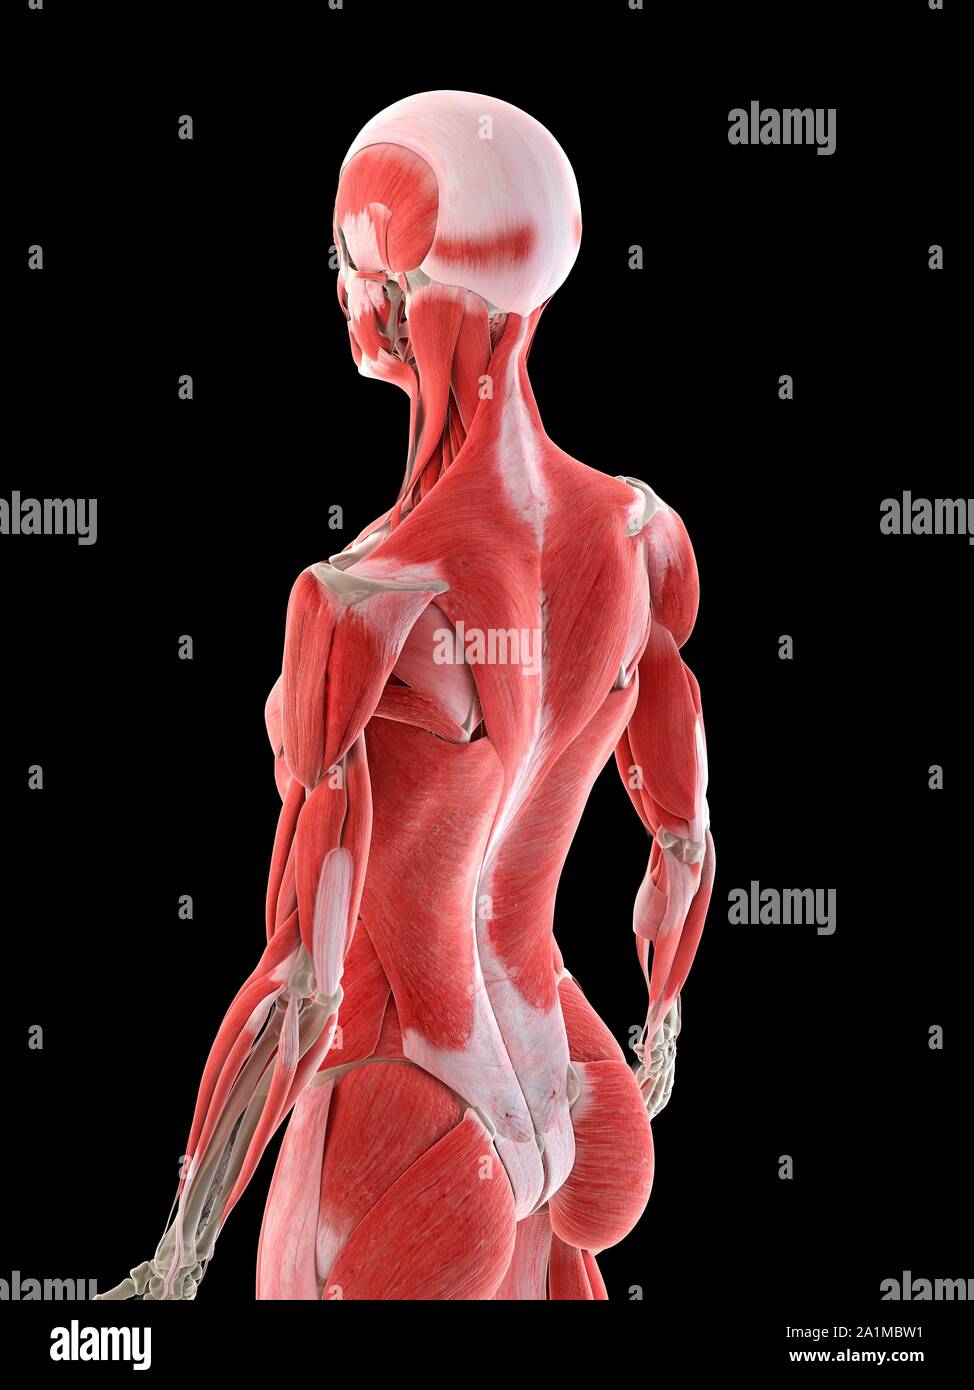 Female back muscles, computer illustration Stock Photo - Alamy